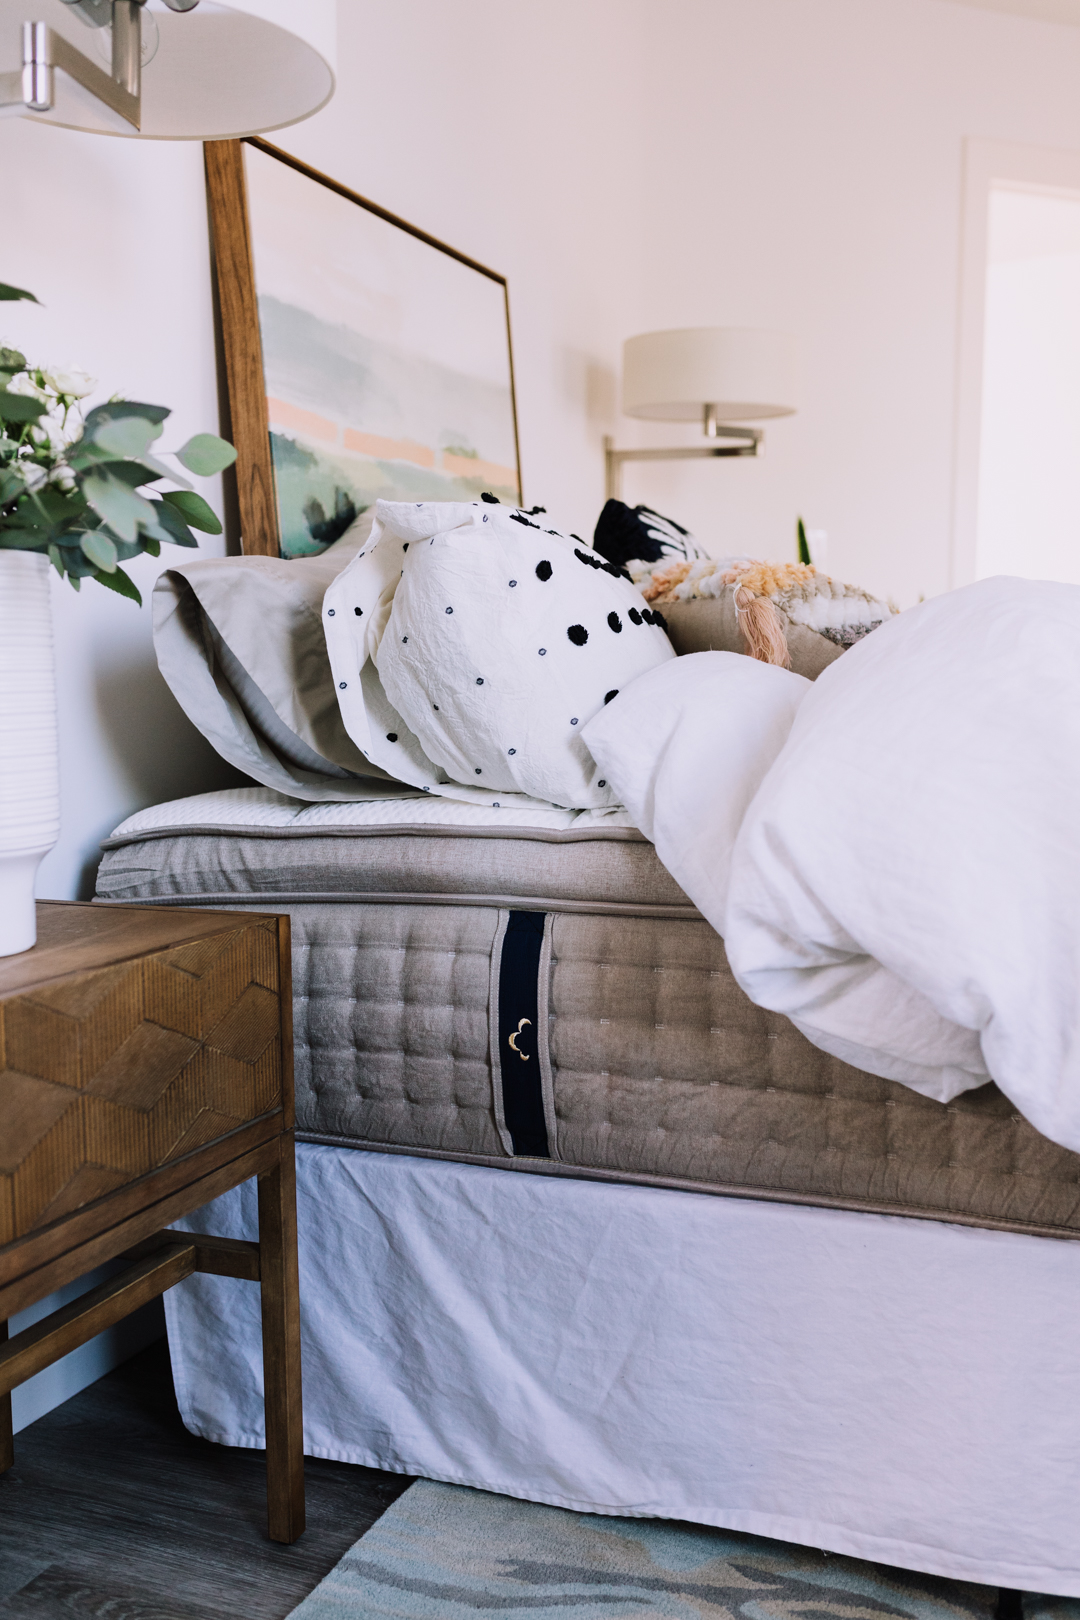 a close up of this dreamy soft mattress | thelovedesignedlie.com #dreamcloud #mydreammattress #dreamcloudsleep #bedroomdecor